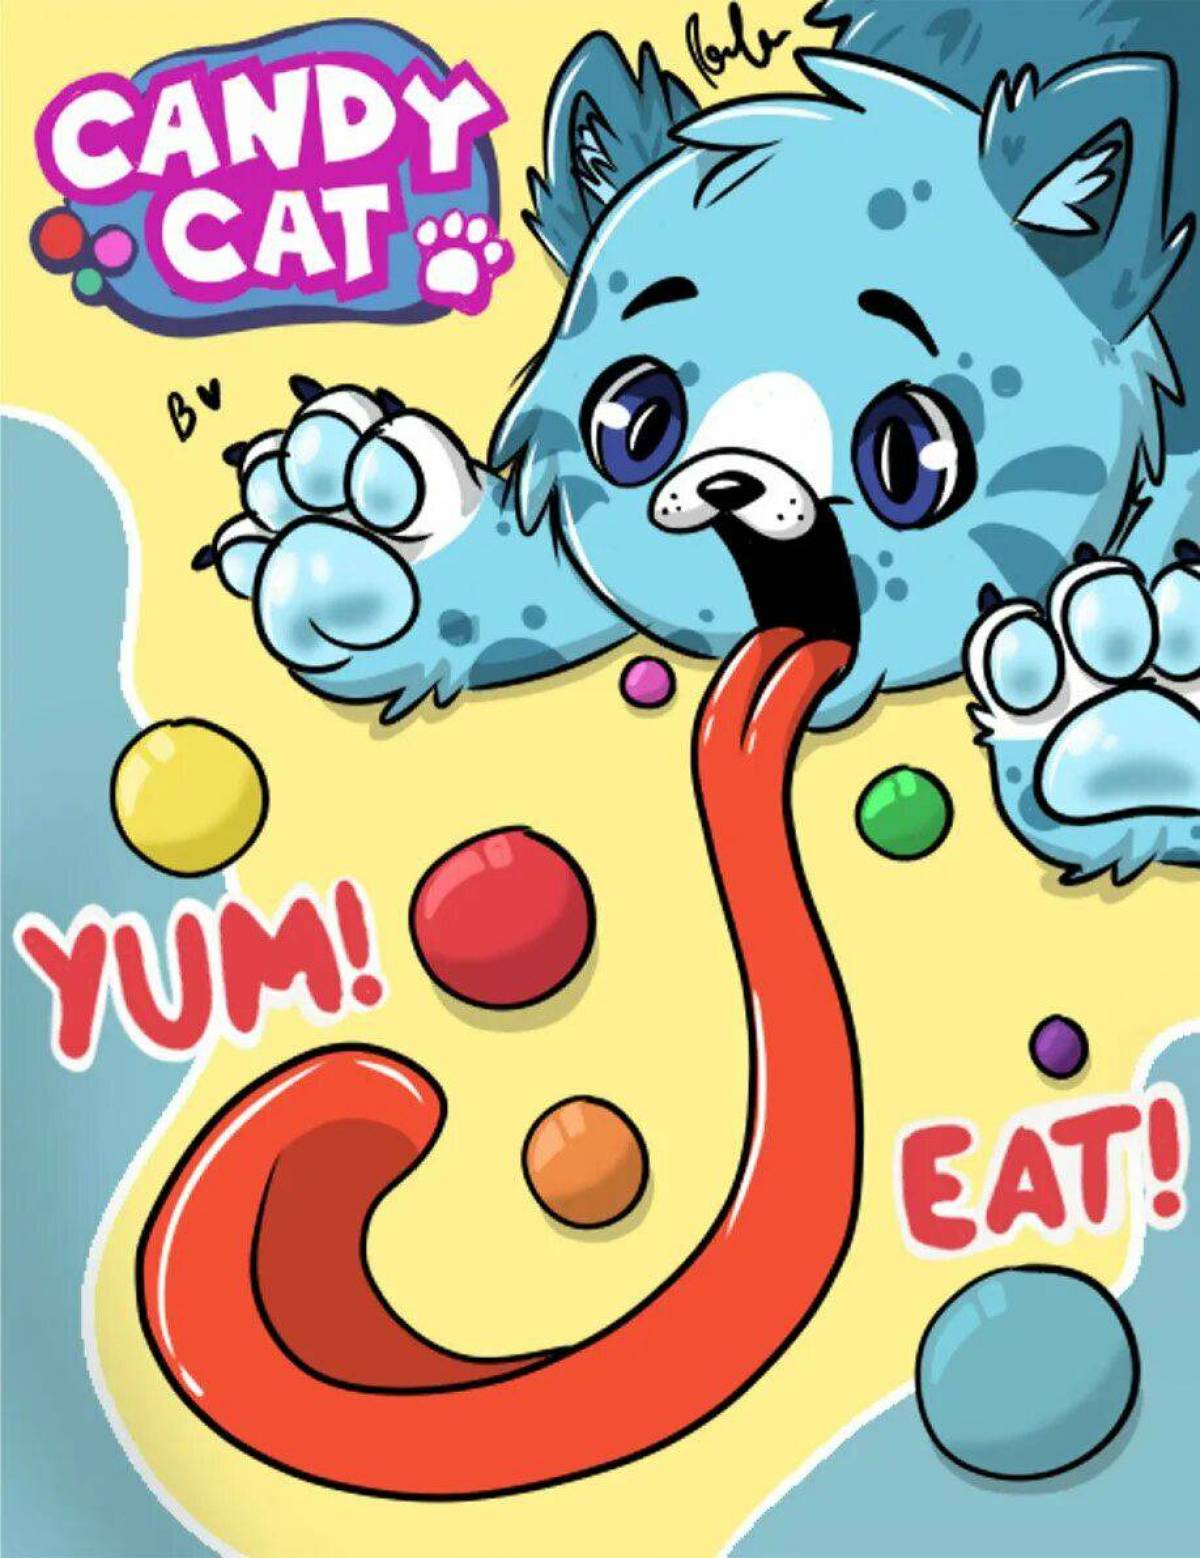 Cat поппи плейтайм. Кэнди Кэт Поппи Плейтайм. Игрушка Candy Cat. Плакат Candy Cat. Candy Cat из Poppy Playtime.